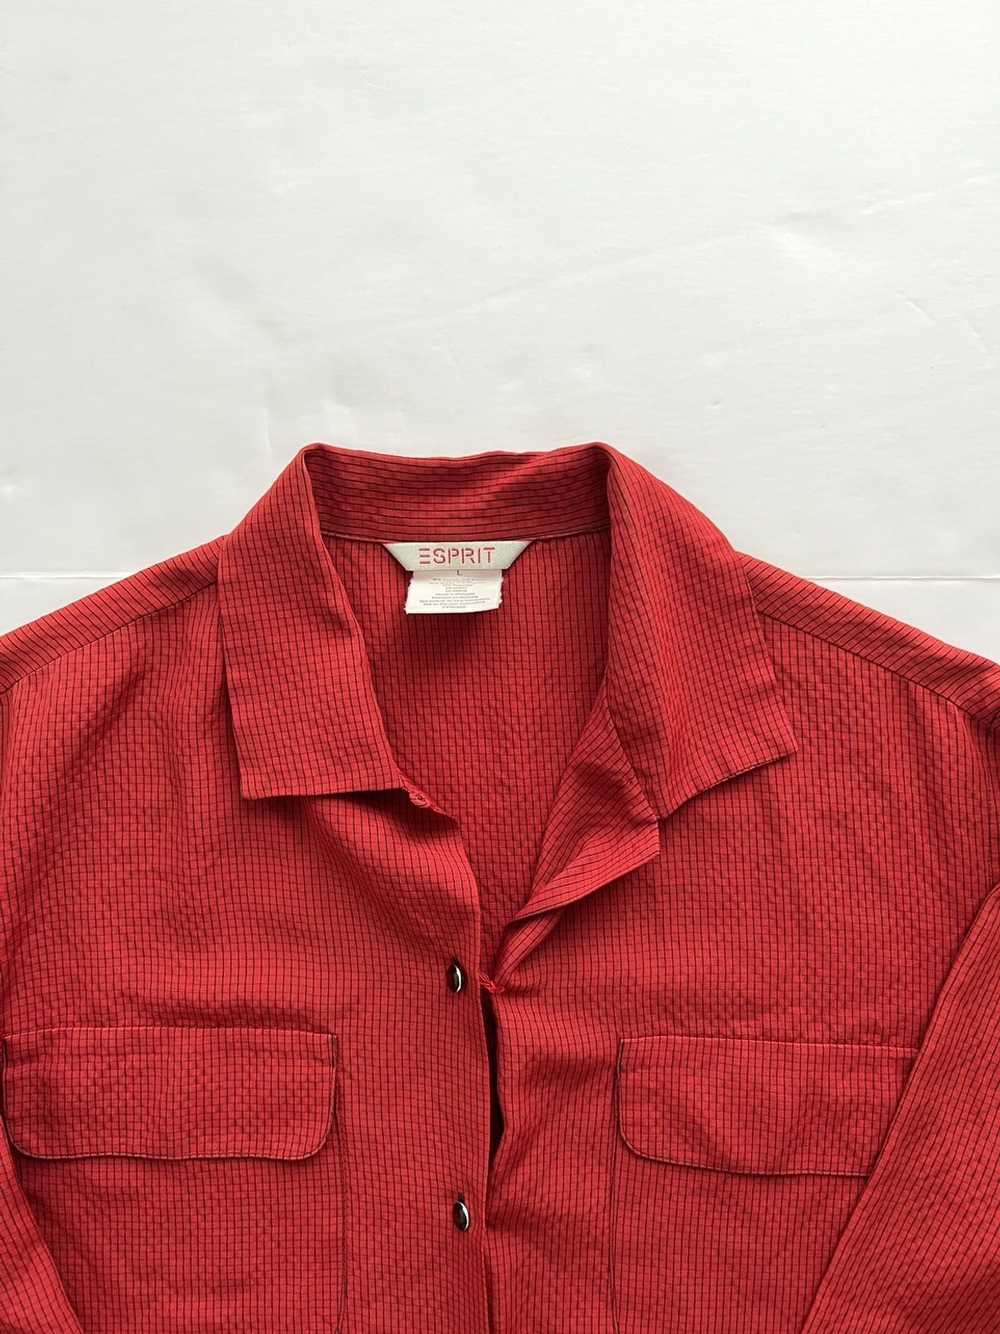 Esprit × Vintage VTG ESPIRIT Camp Collar Shirt - image 2